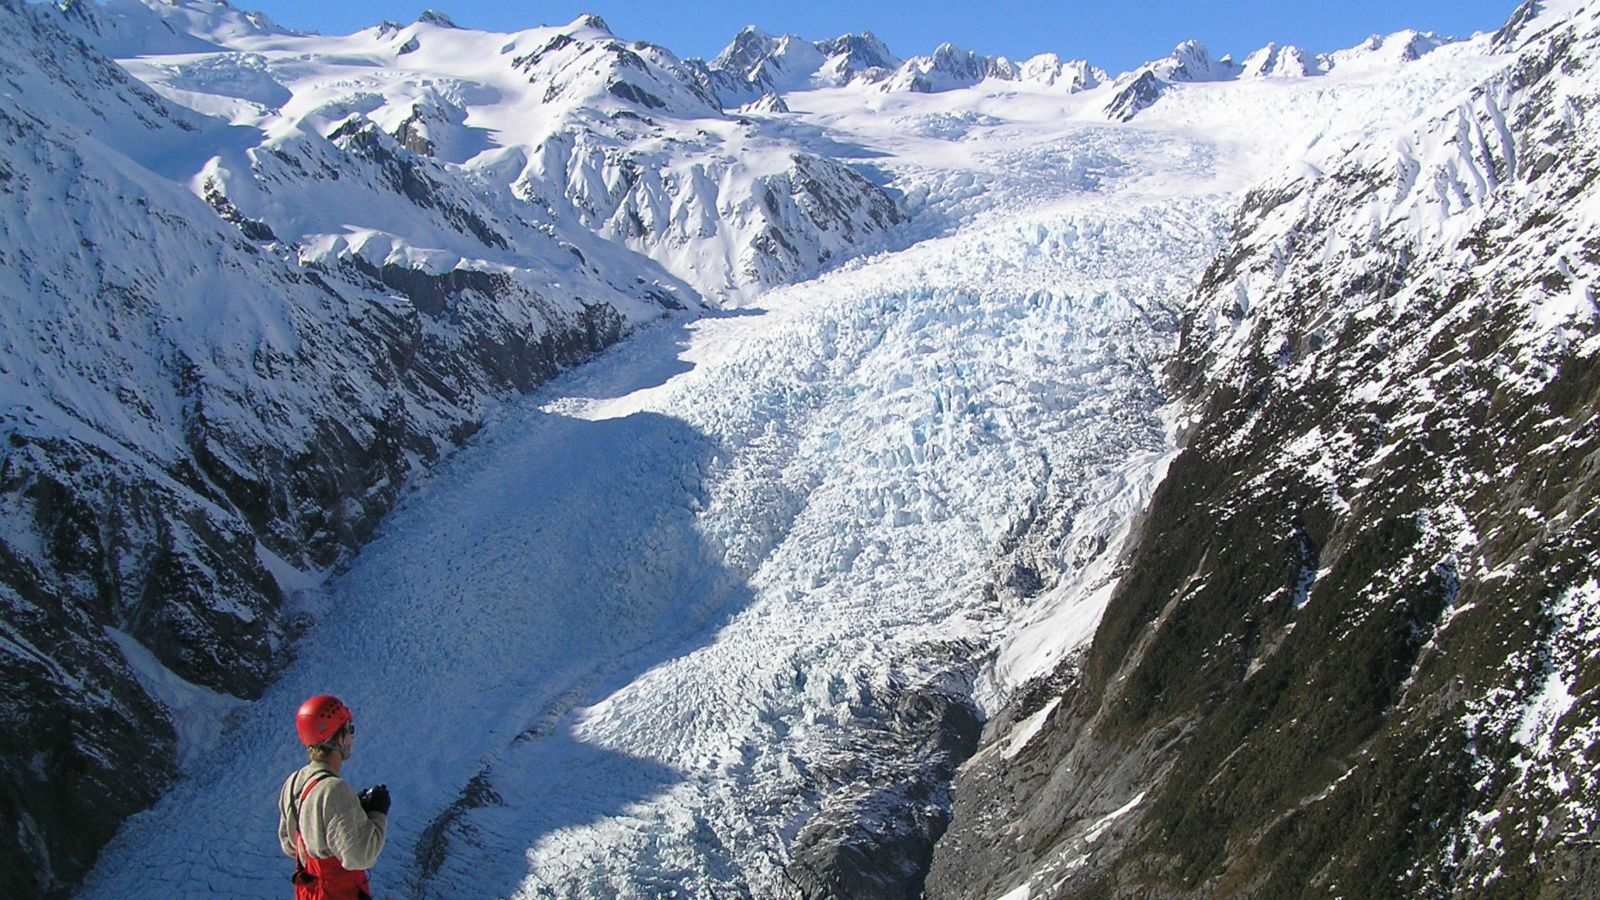 Julian Thompson at Franz Josef Glacier in 2005